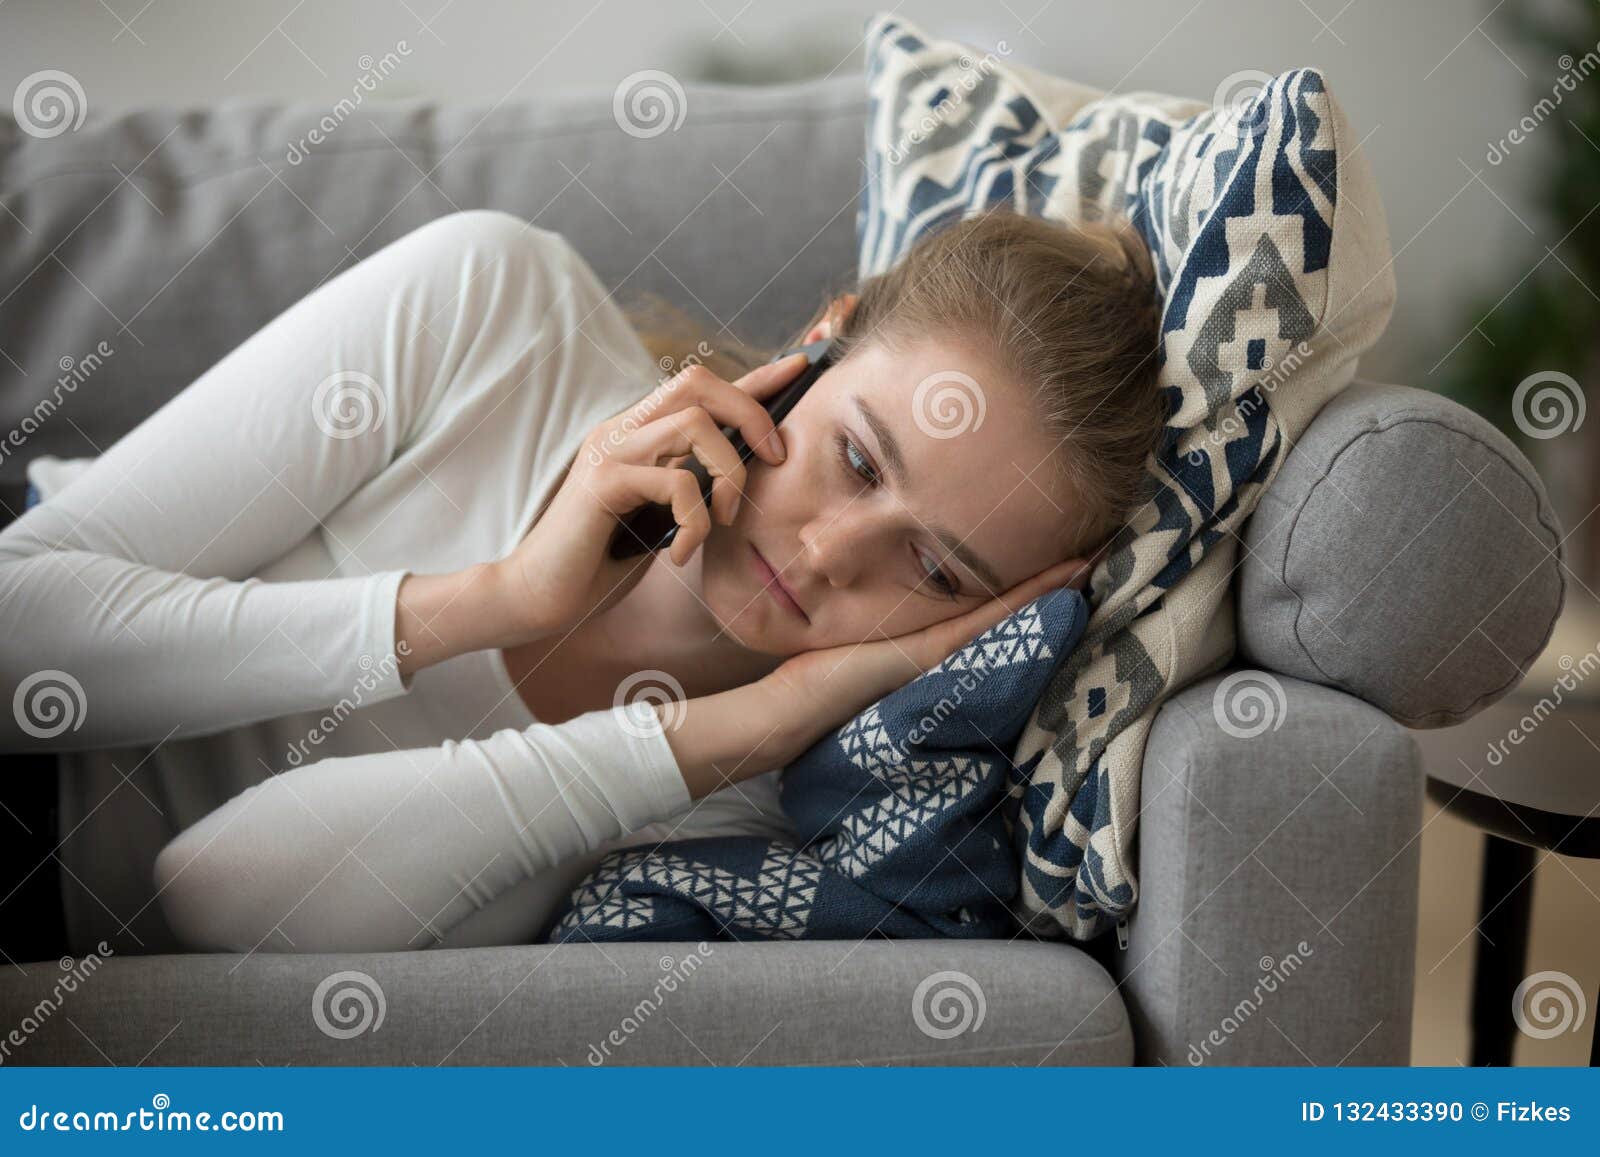 upset girl lying on couch having unpleasant phone talk